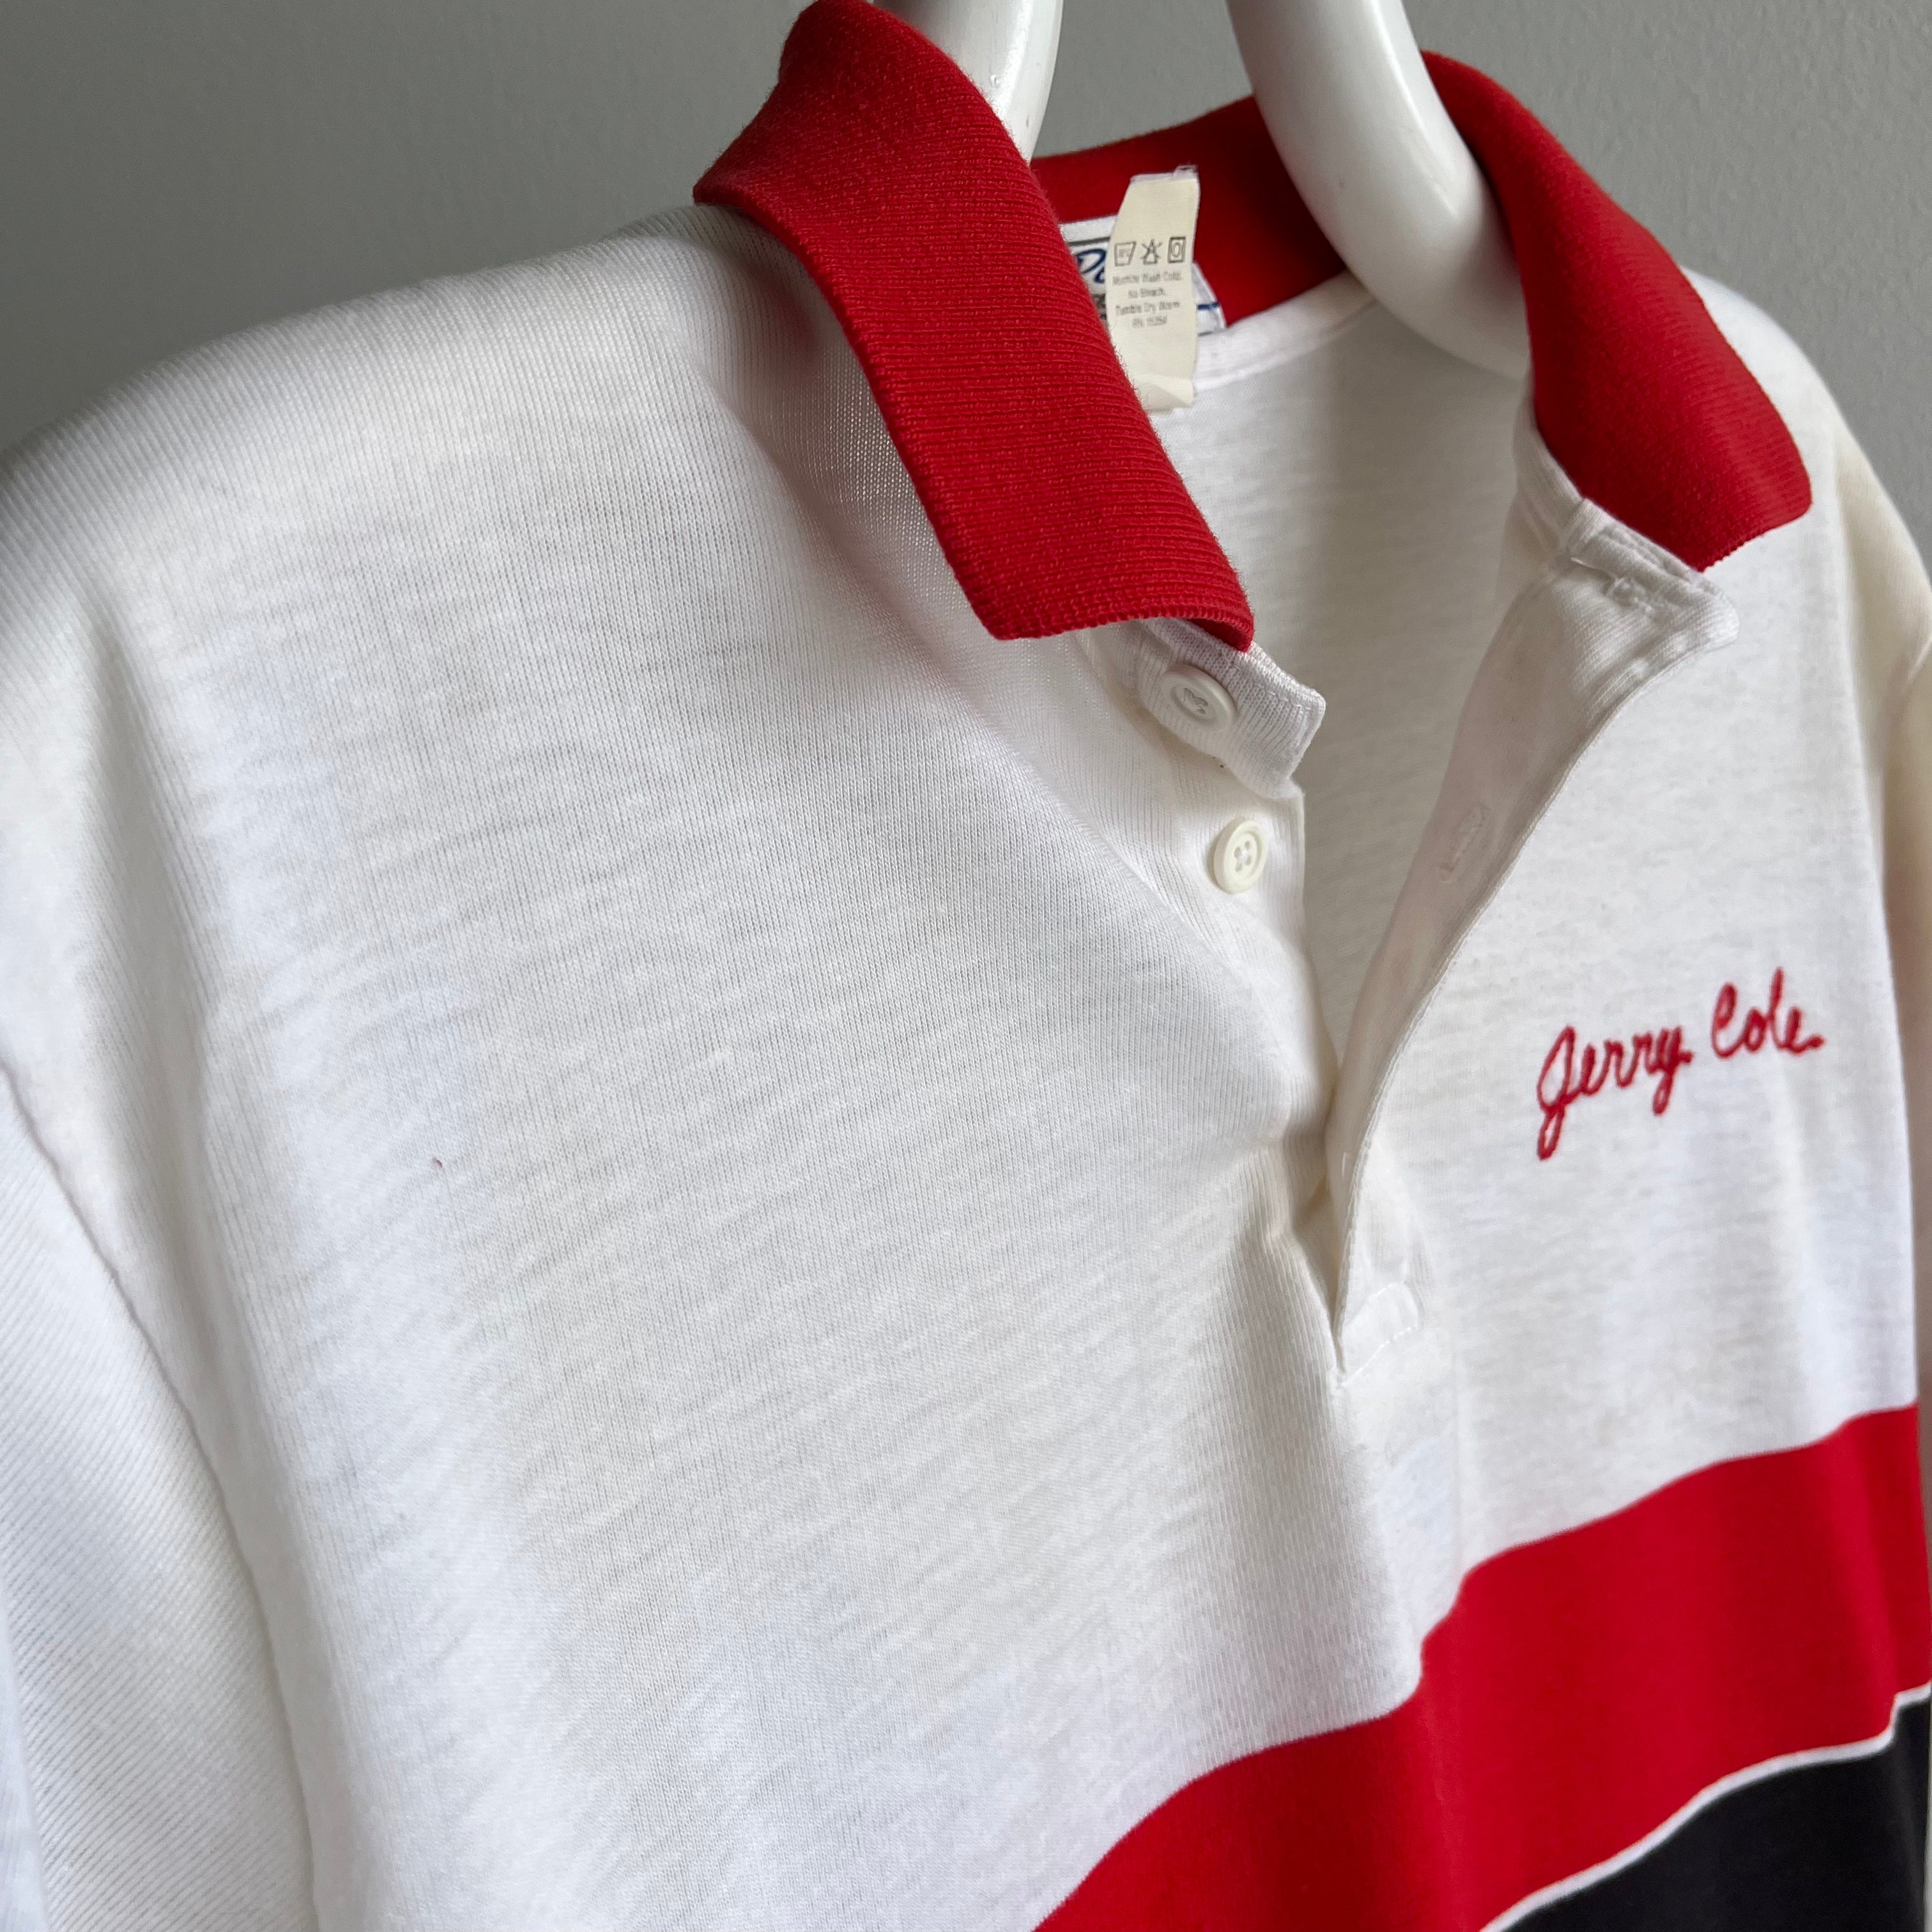 1970s Jerry Cole's Par or Better Golf Club St. Louis, MO Polo Shirt - WOAH